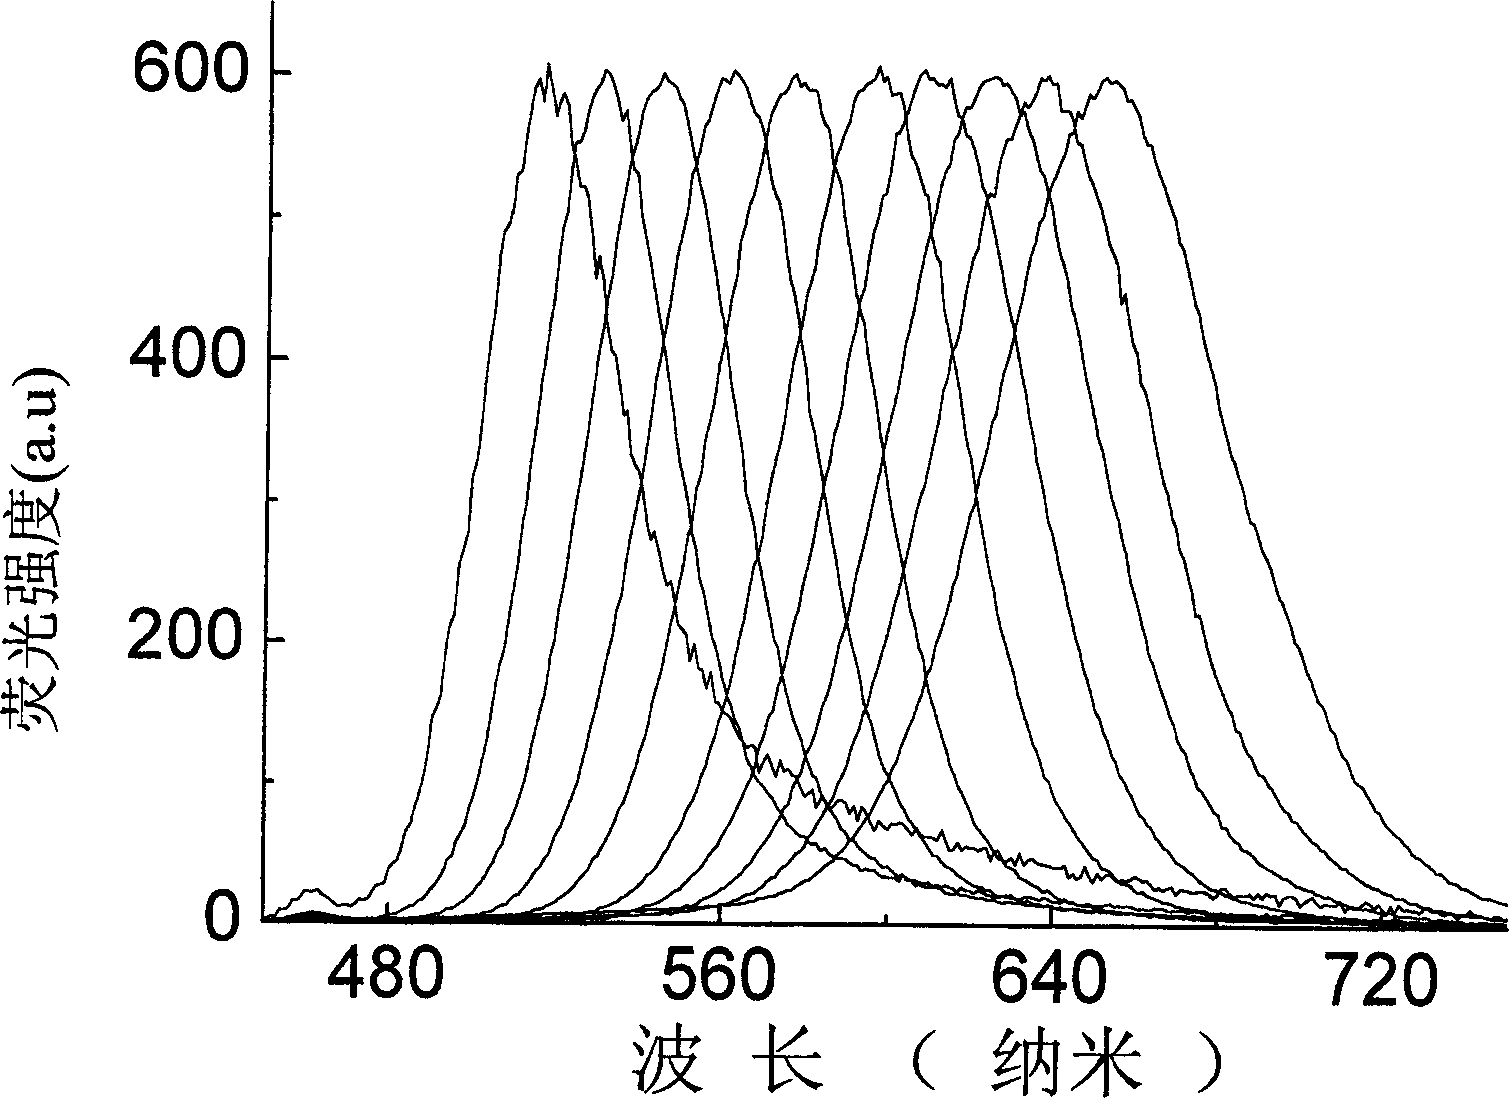 Silicon dioxide fluorescent microball containing cadmium telluride fluorescence quantum point